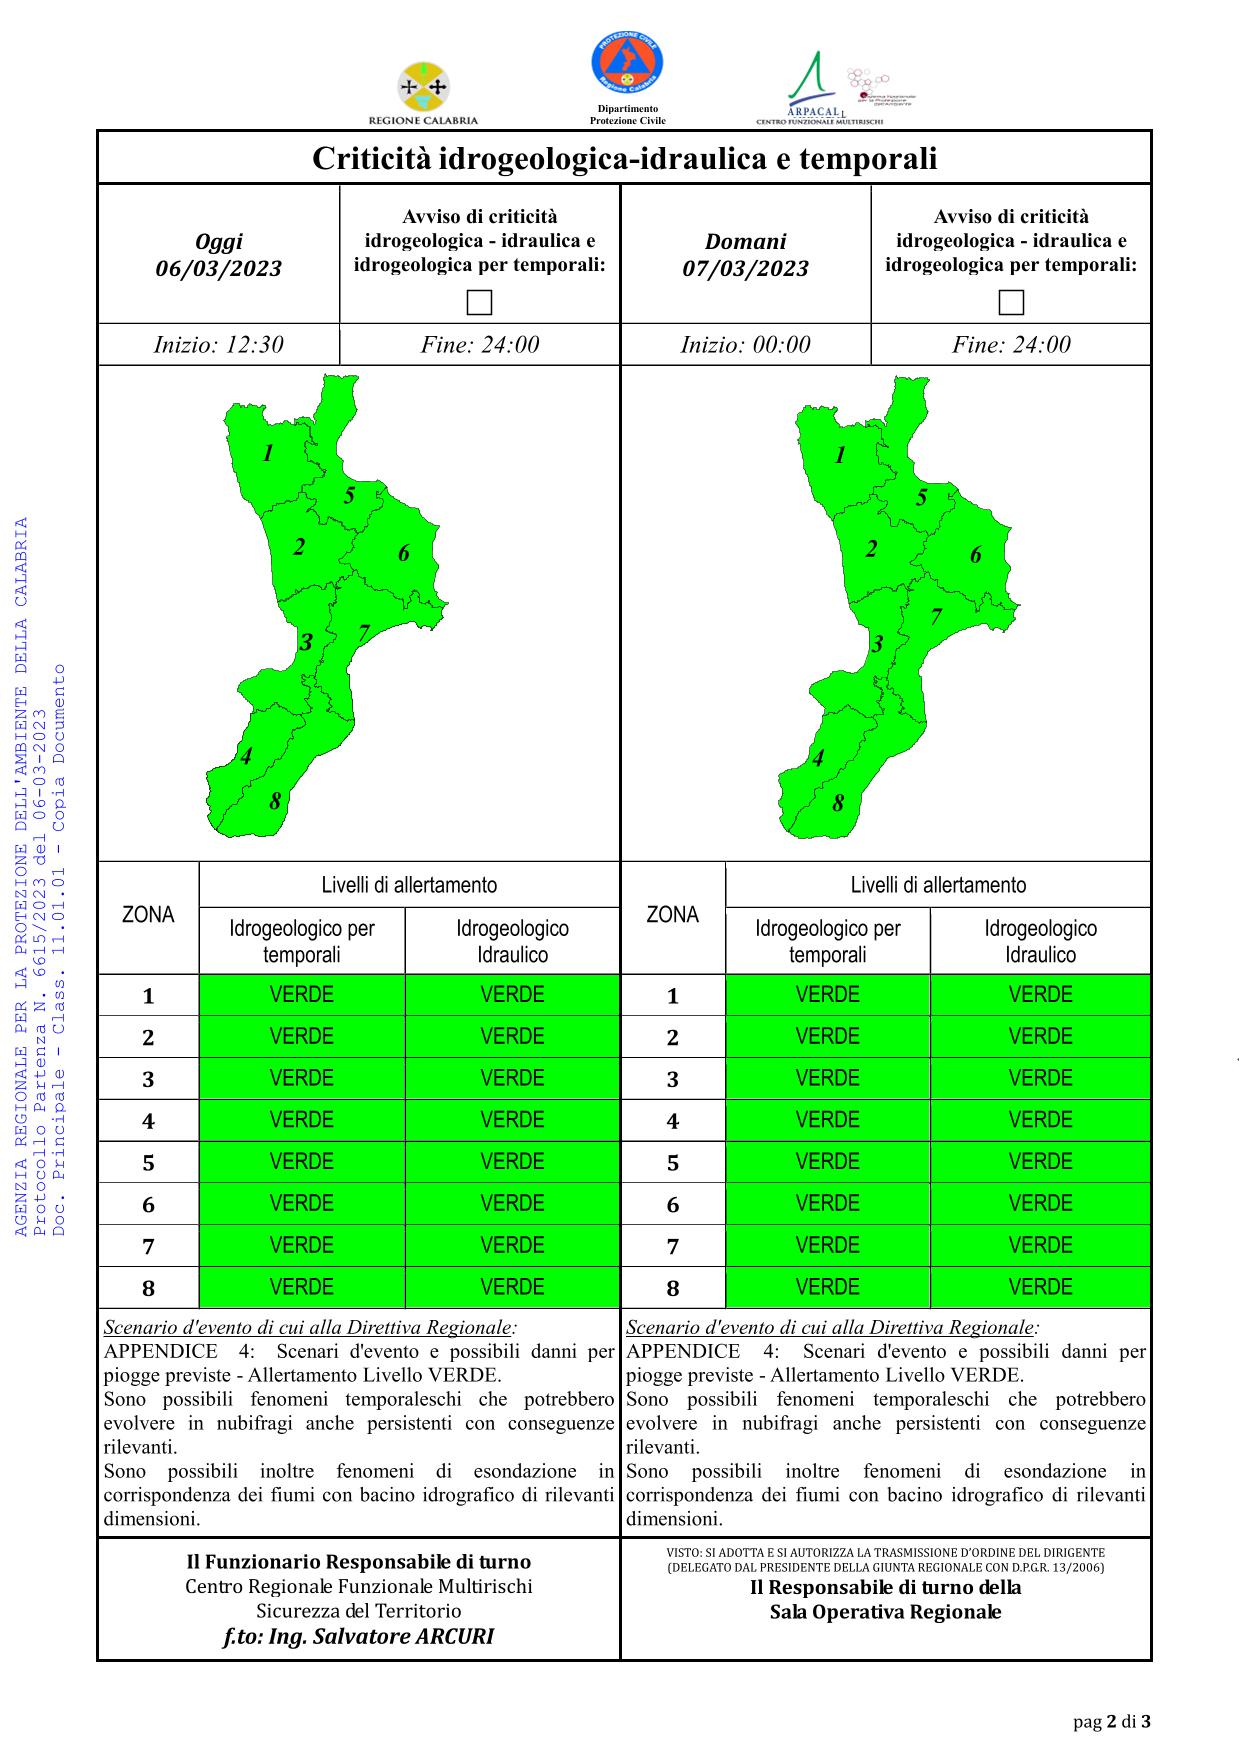 Criticità idrogeologica-idraulica e temporali in Calabria 06-03-2023